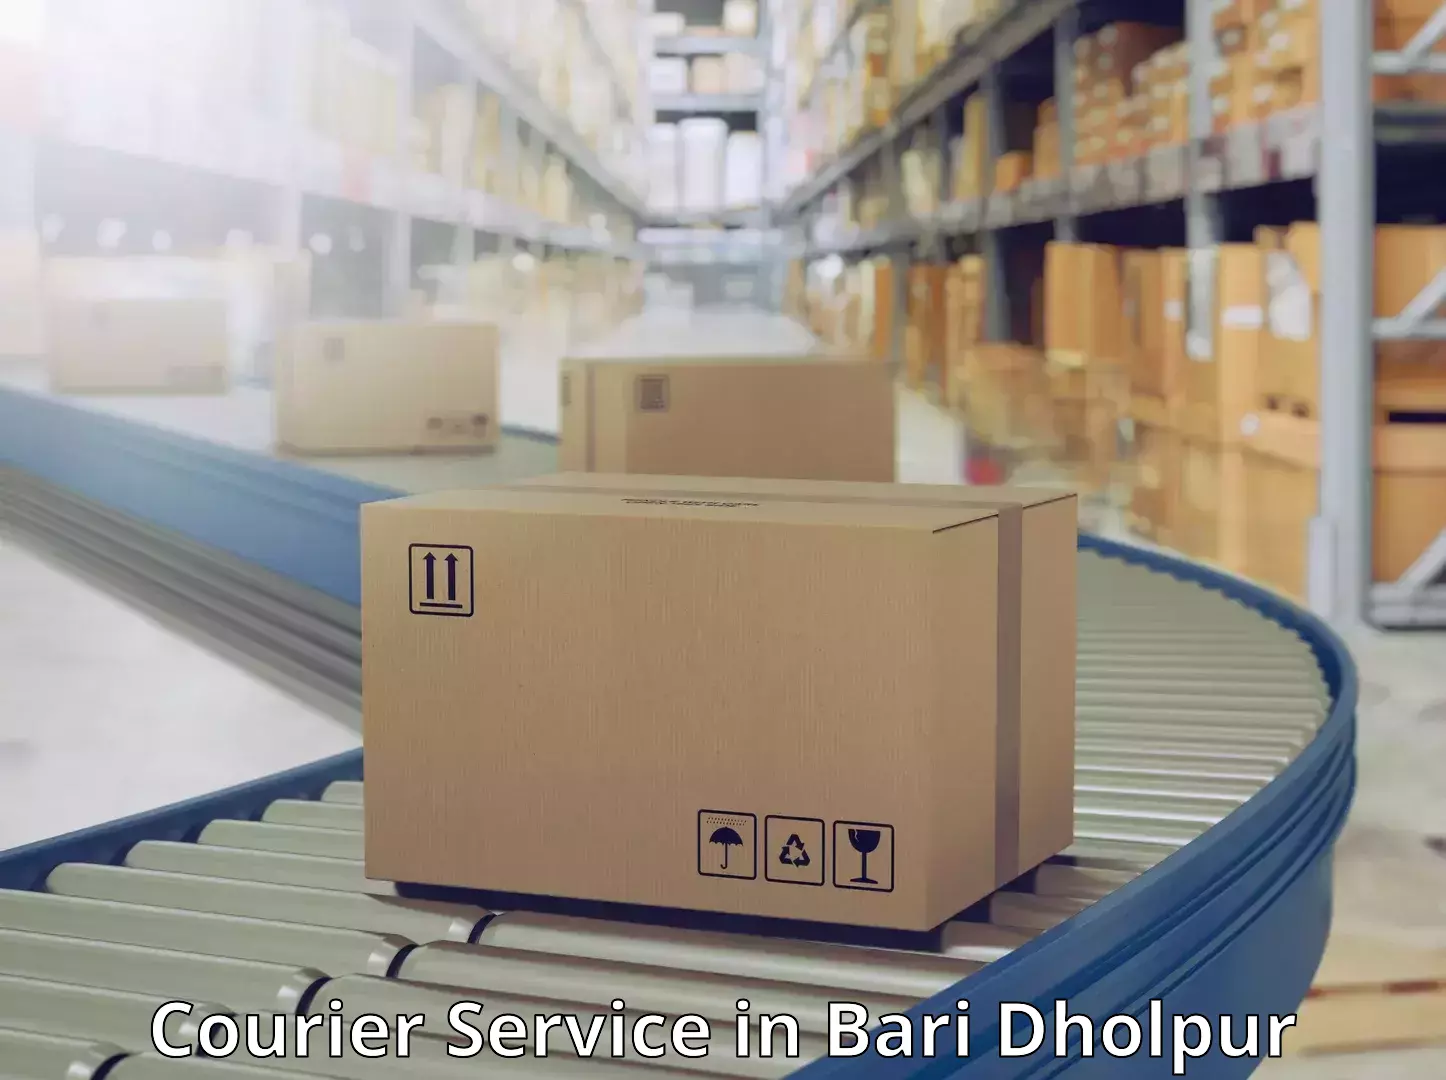 High-priority parcel service in Bari Dholpur